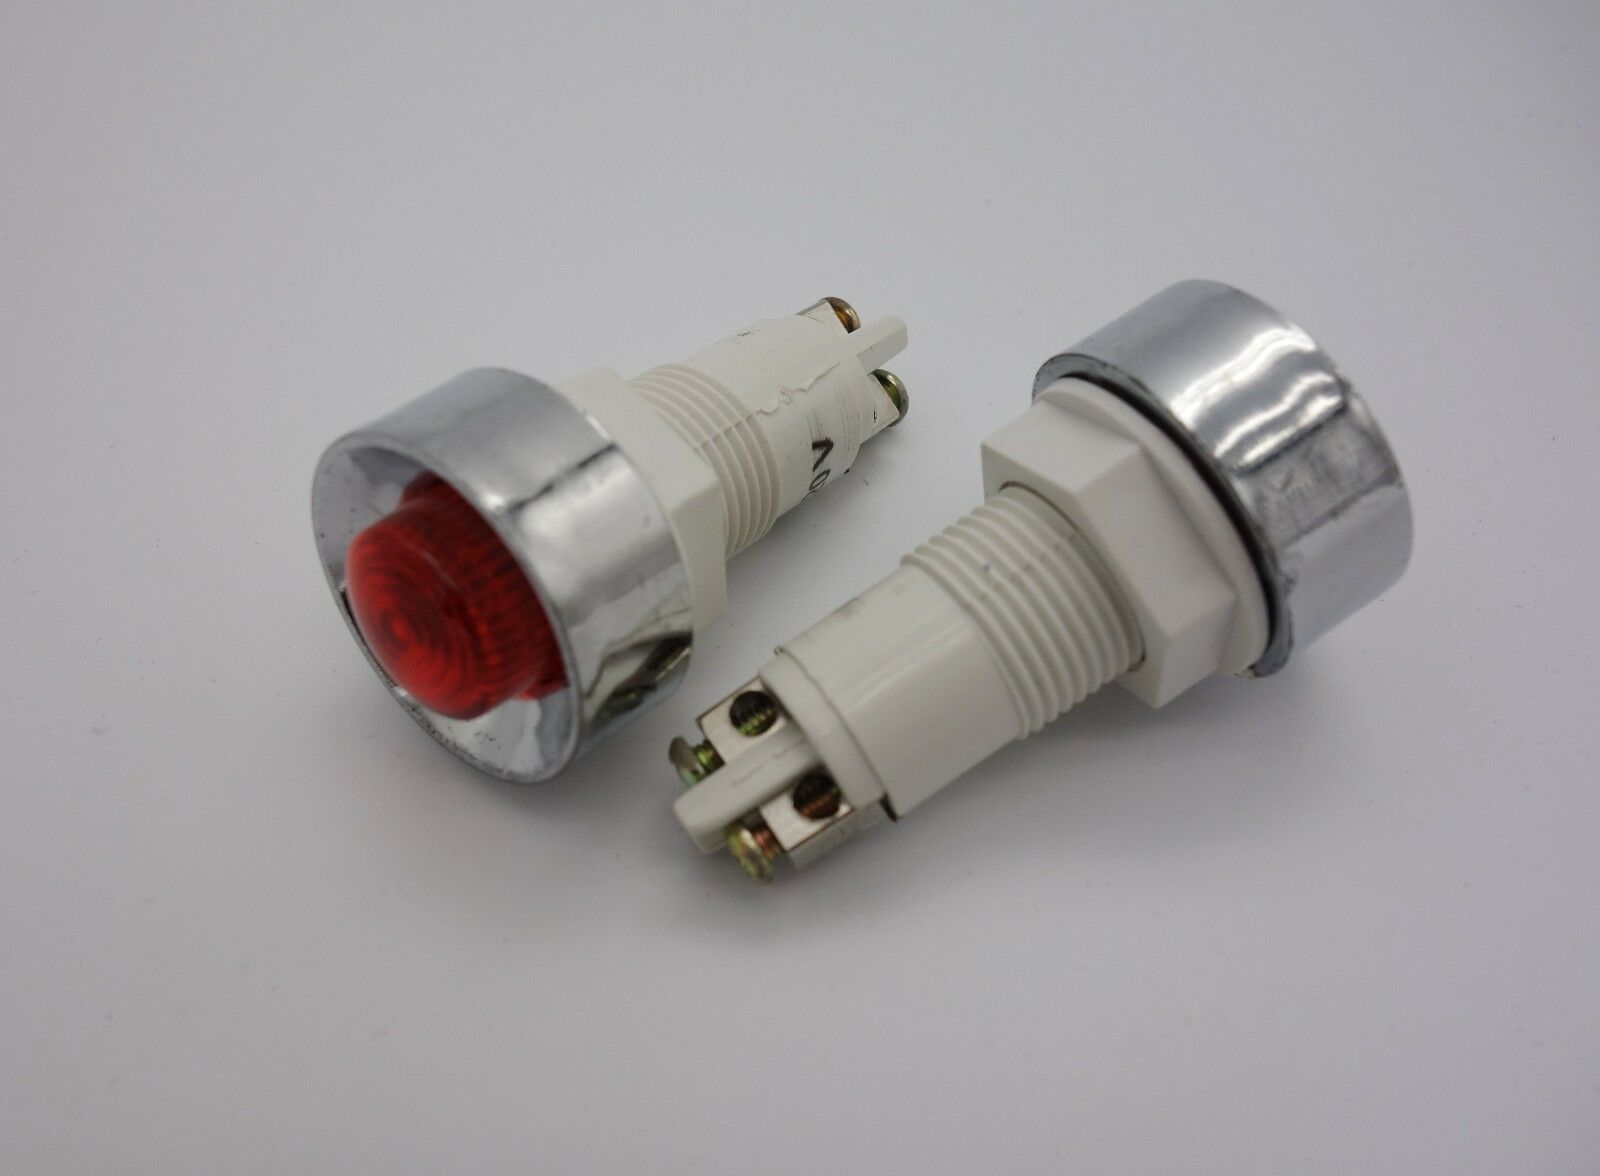 5 Pcs Cutout 13.5mm 24V DC/AC RED incandescent Pilot Lights Screw terminal